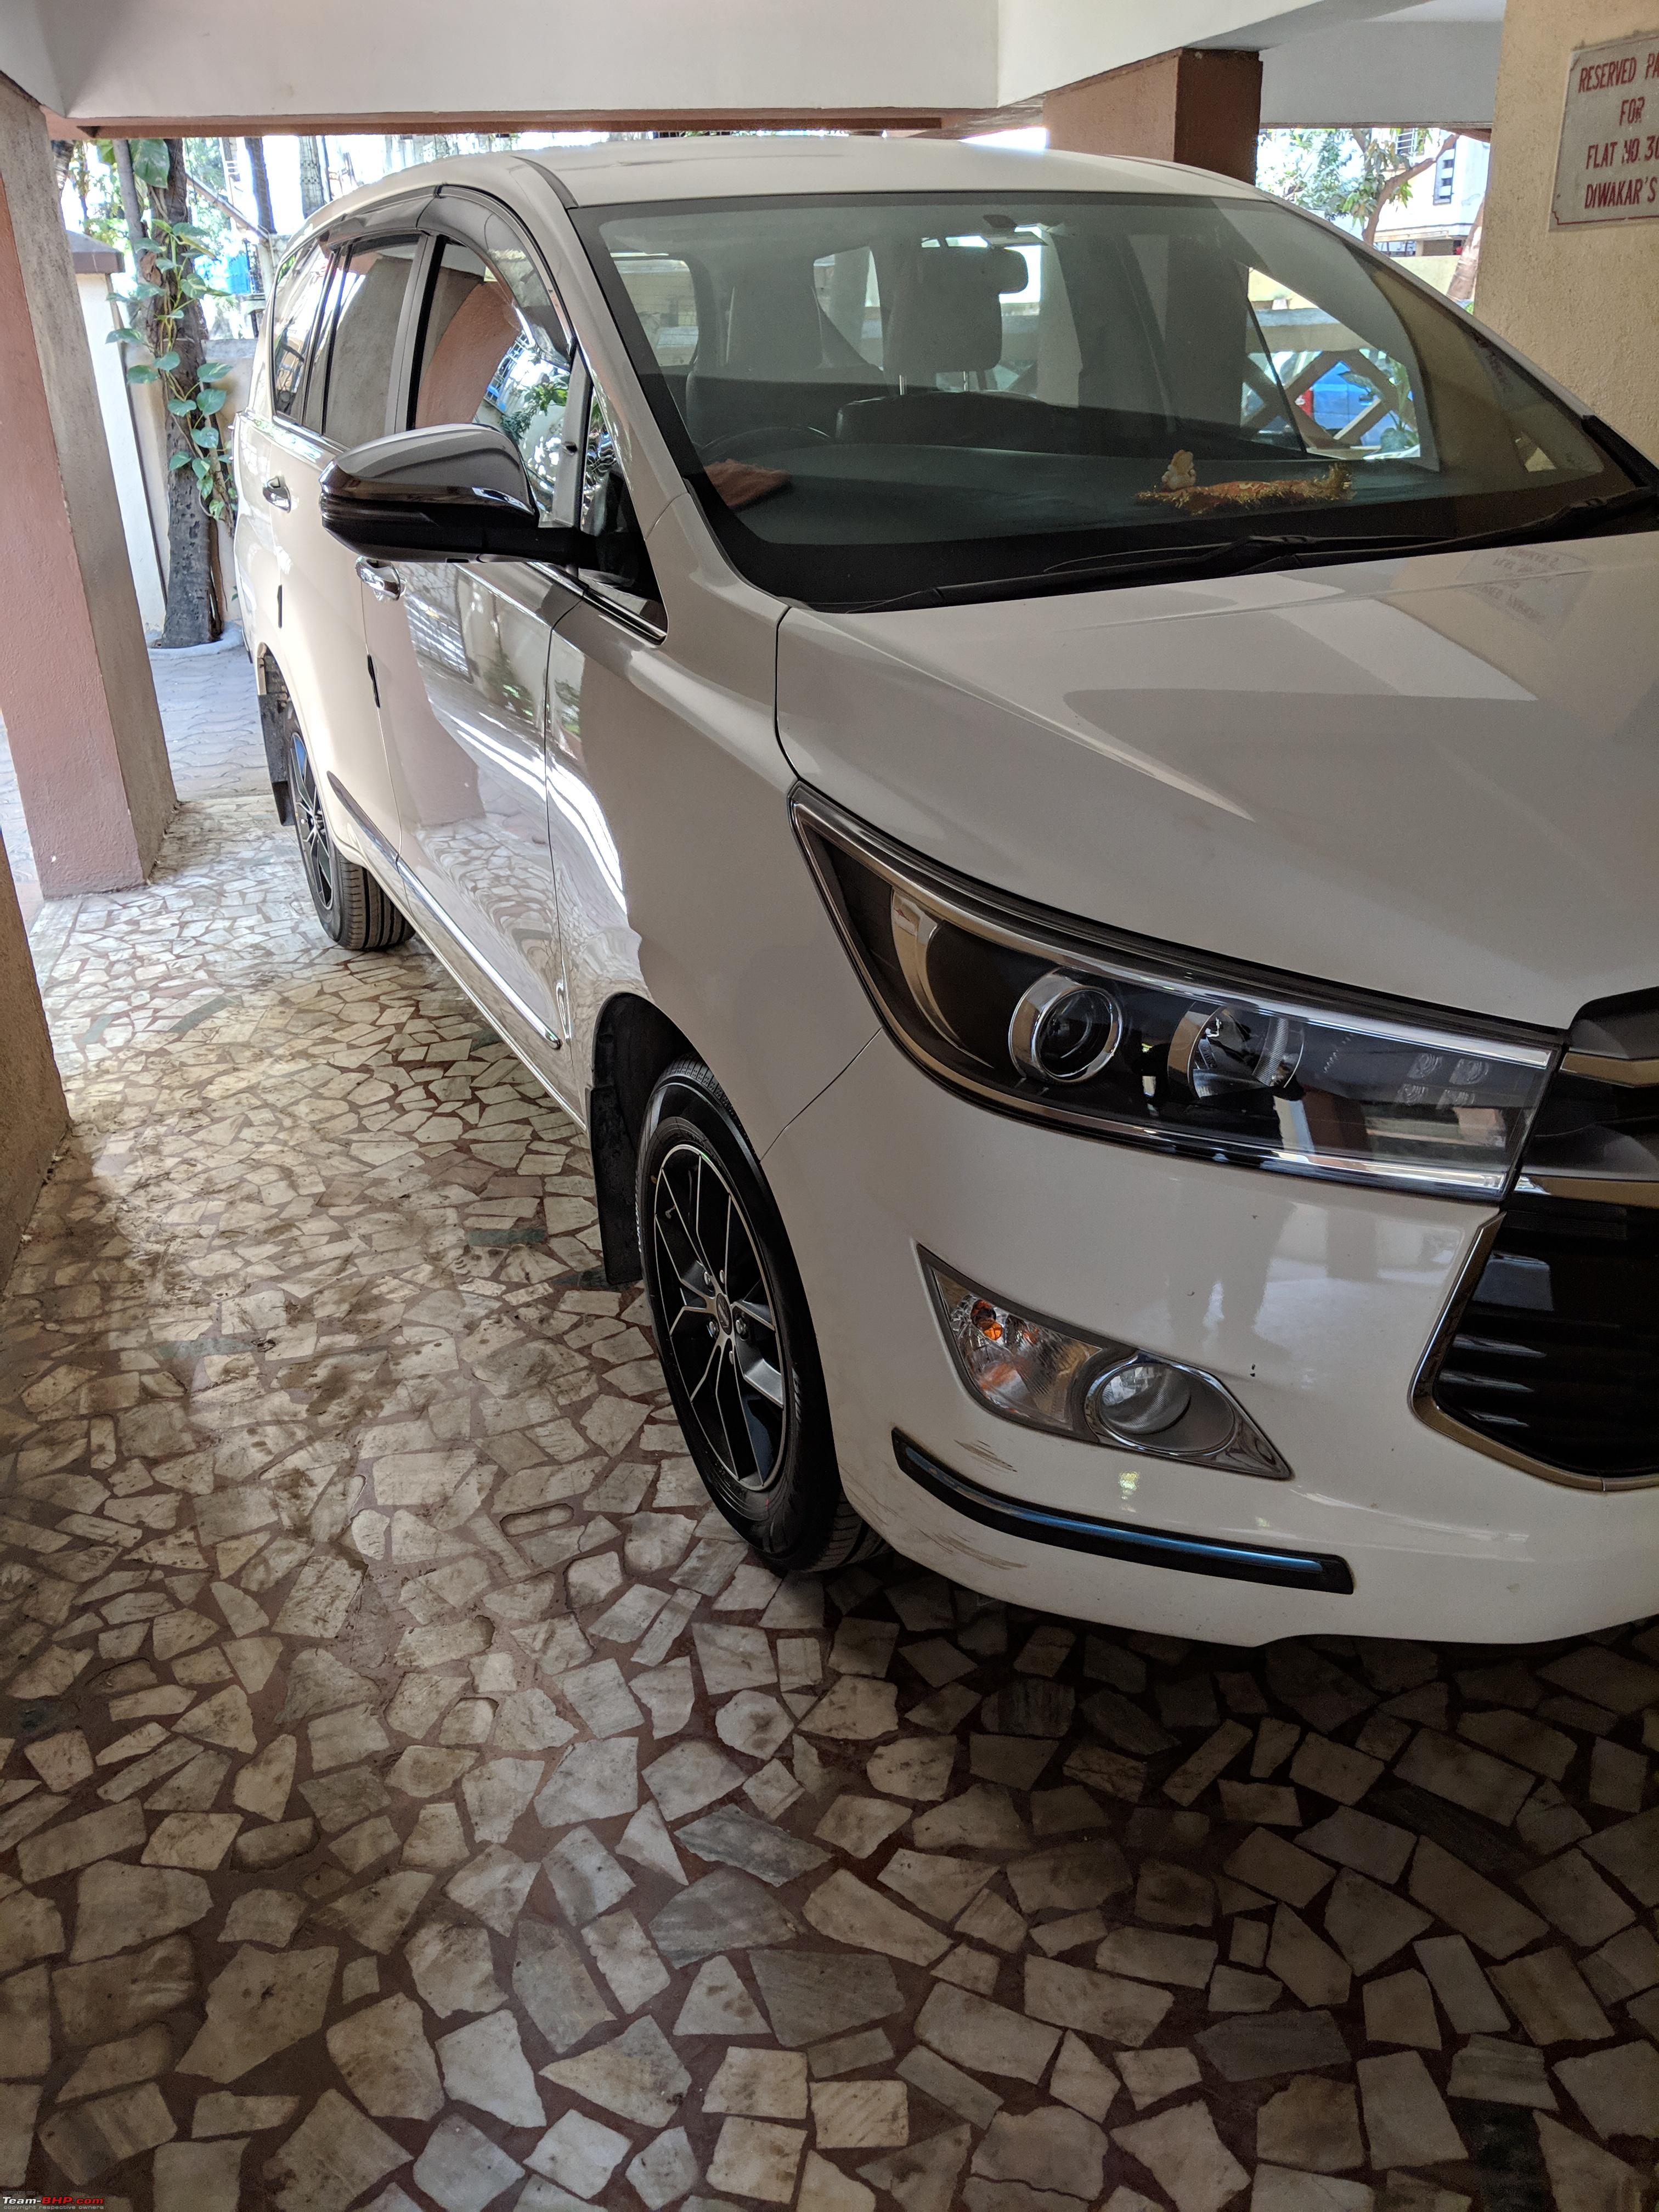 Toyota Innova Crysta Facelift 2020 India